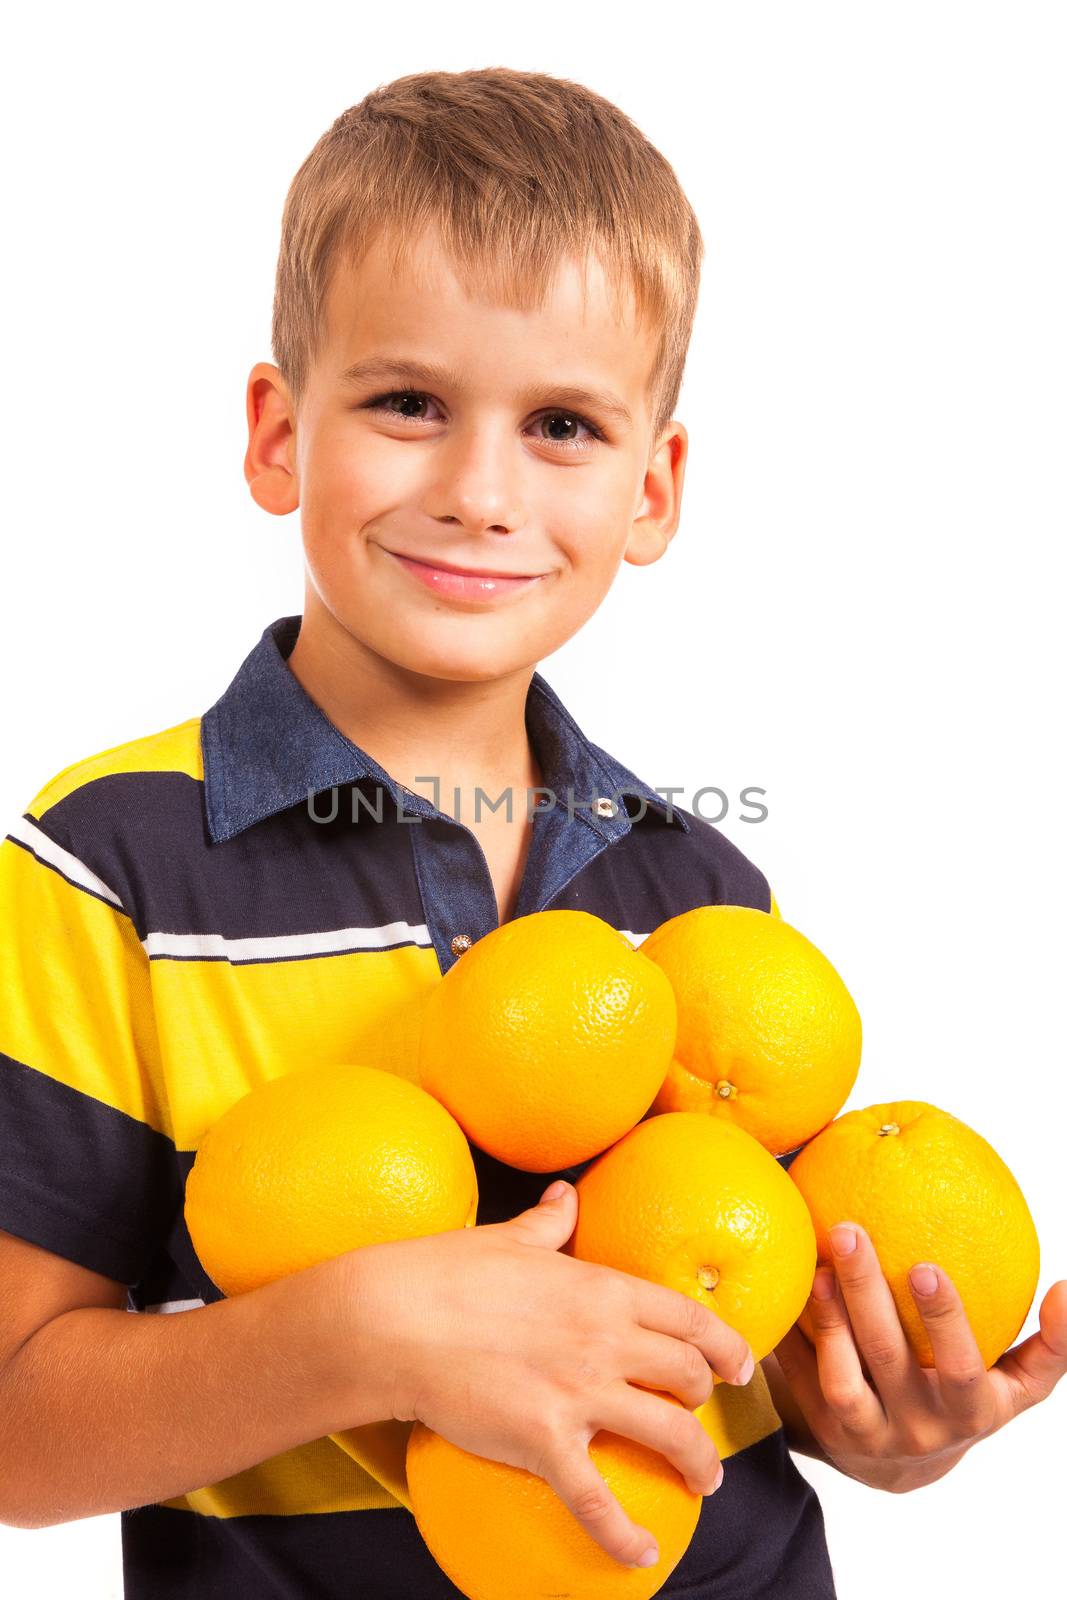 Boy holding oranges by bloodua